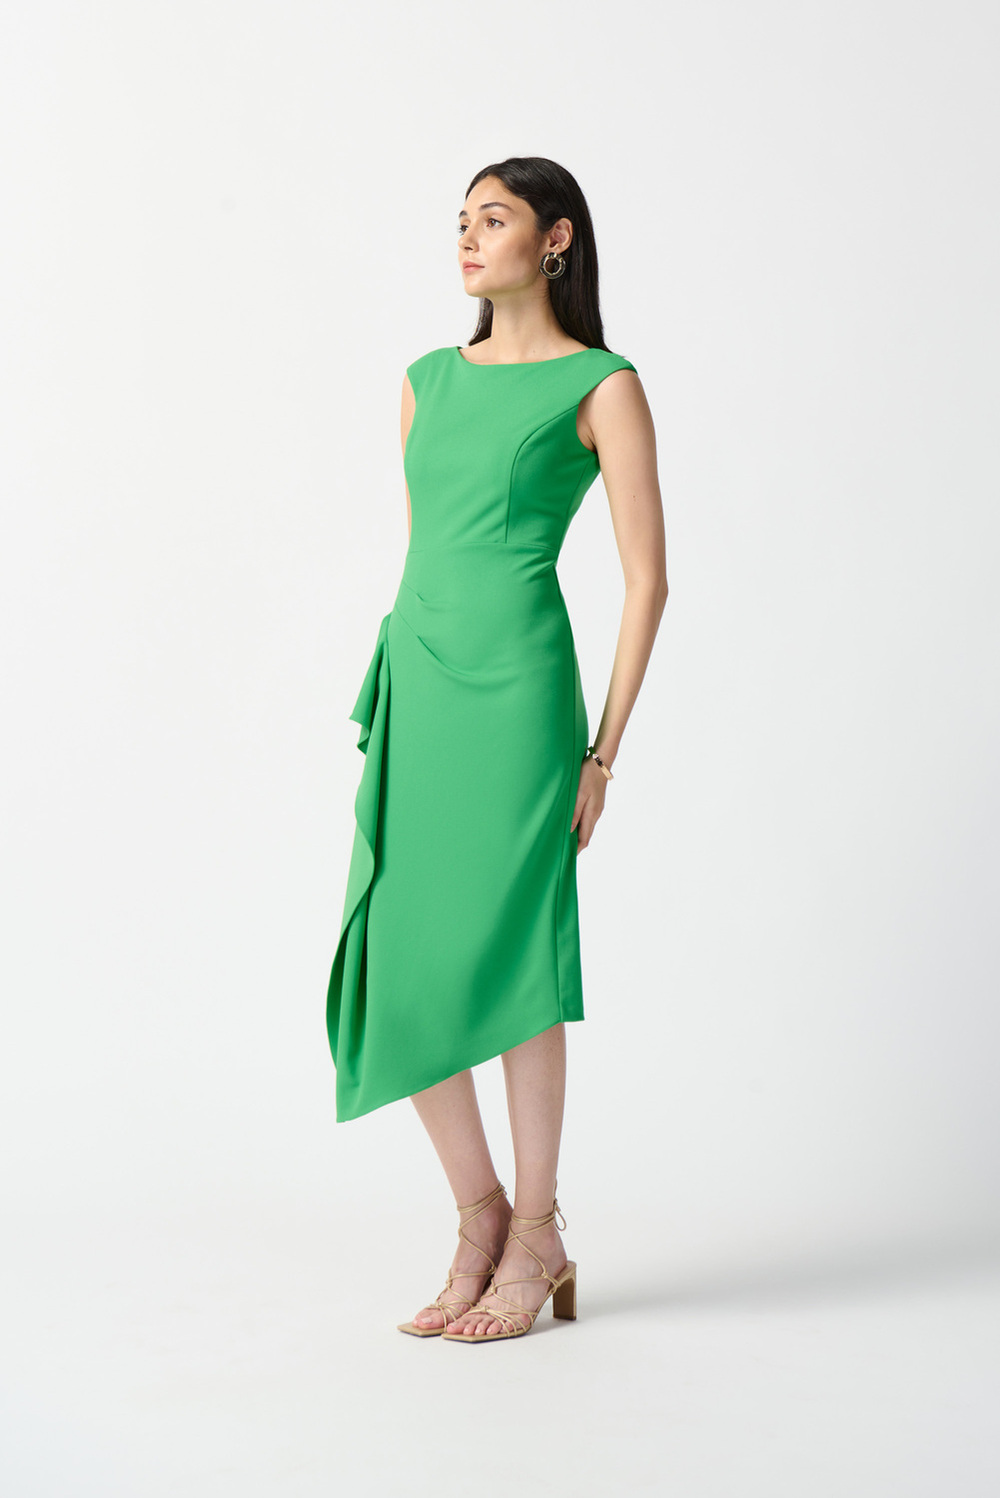 Ruffle Sheath Dress Style 242238. Island Green